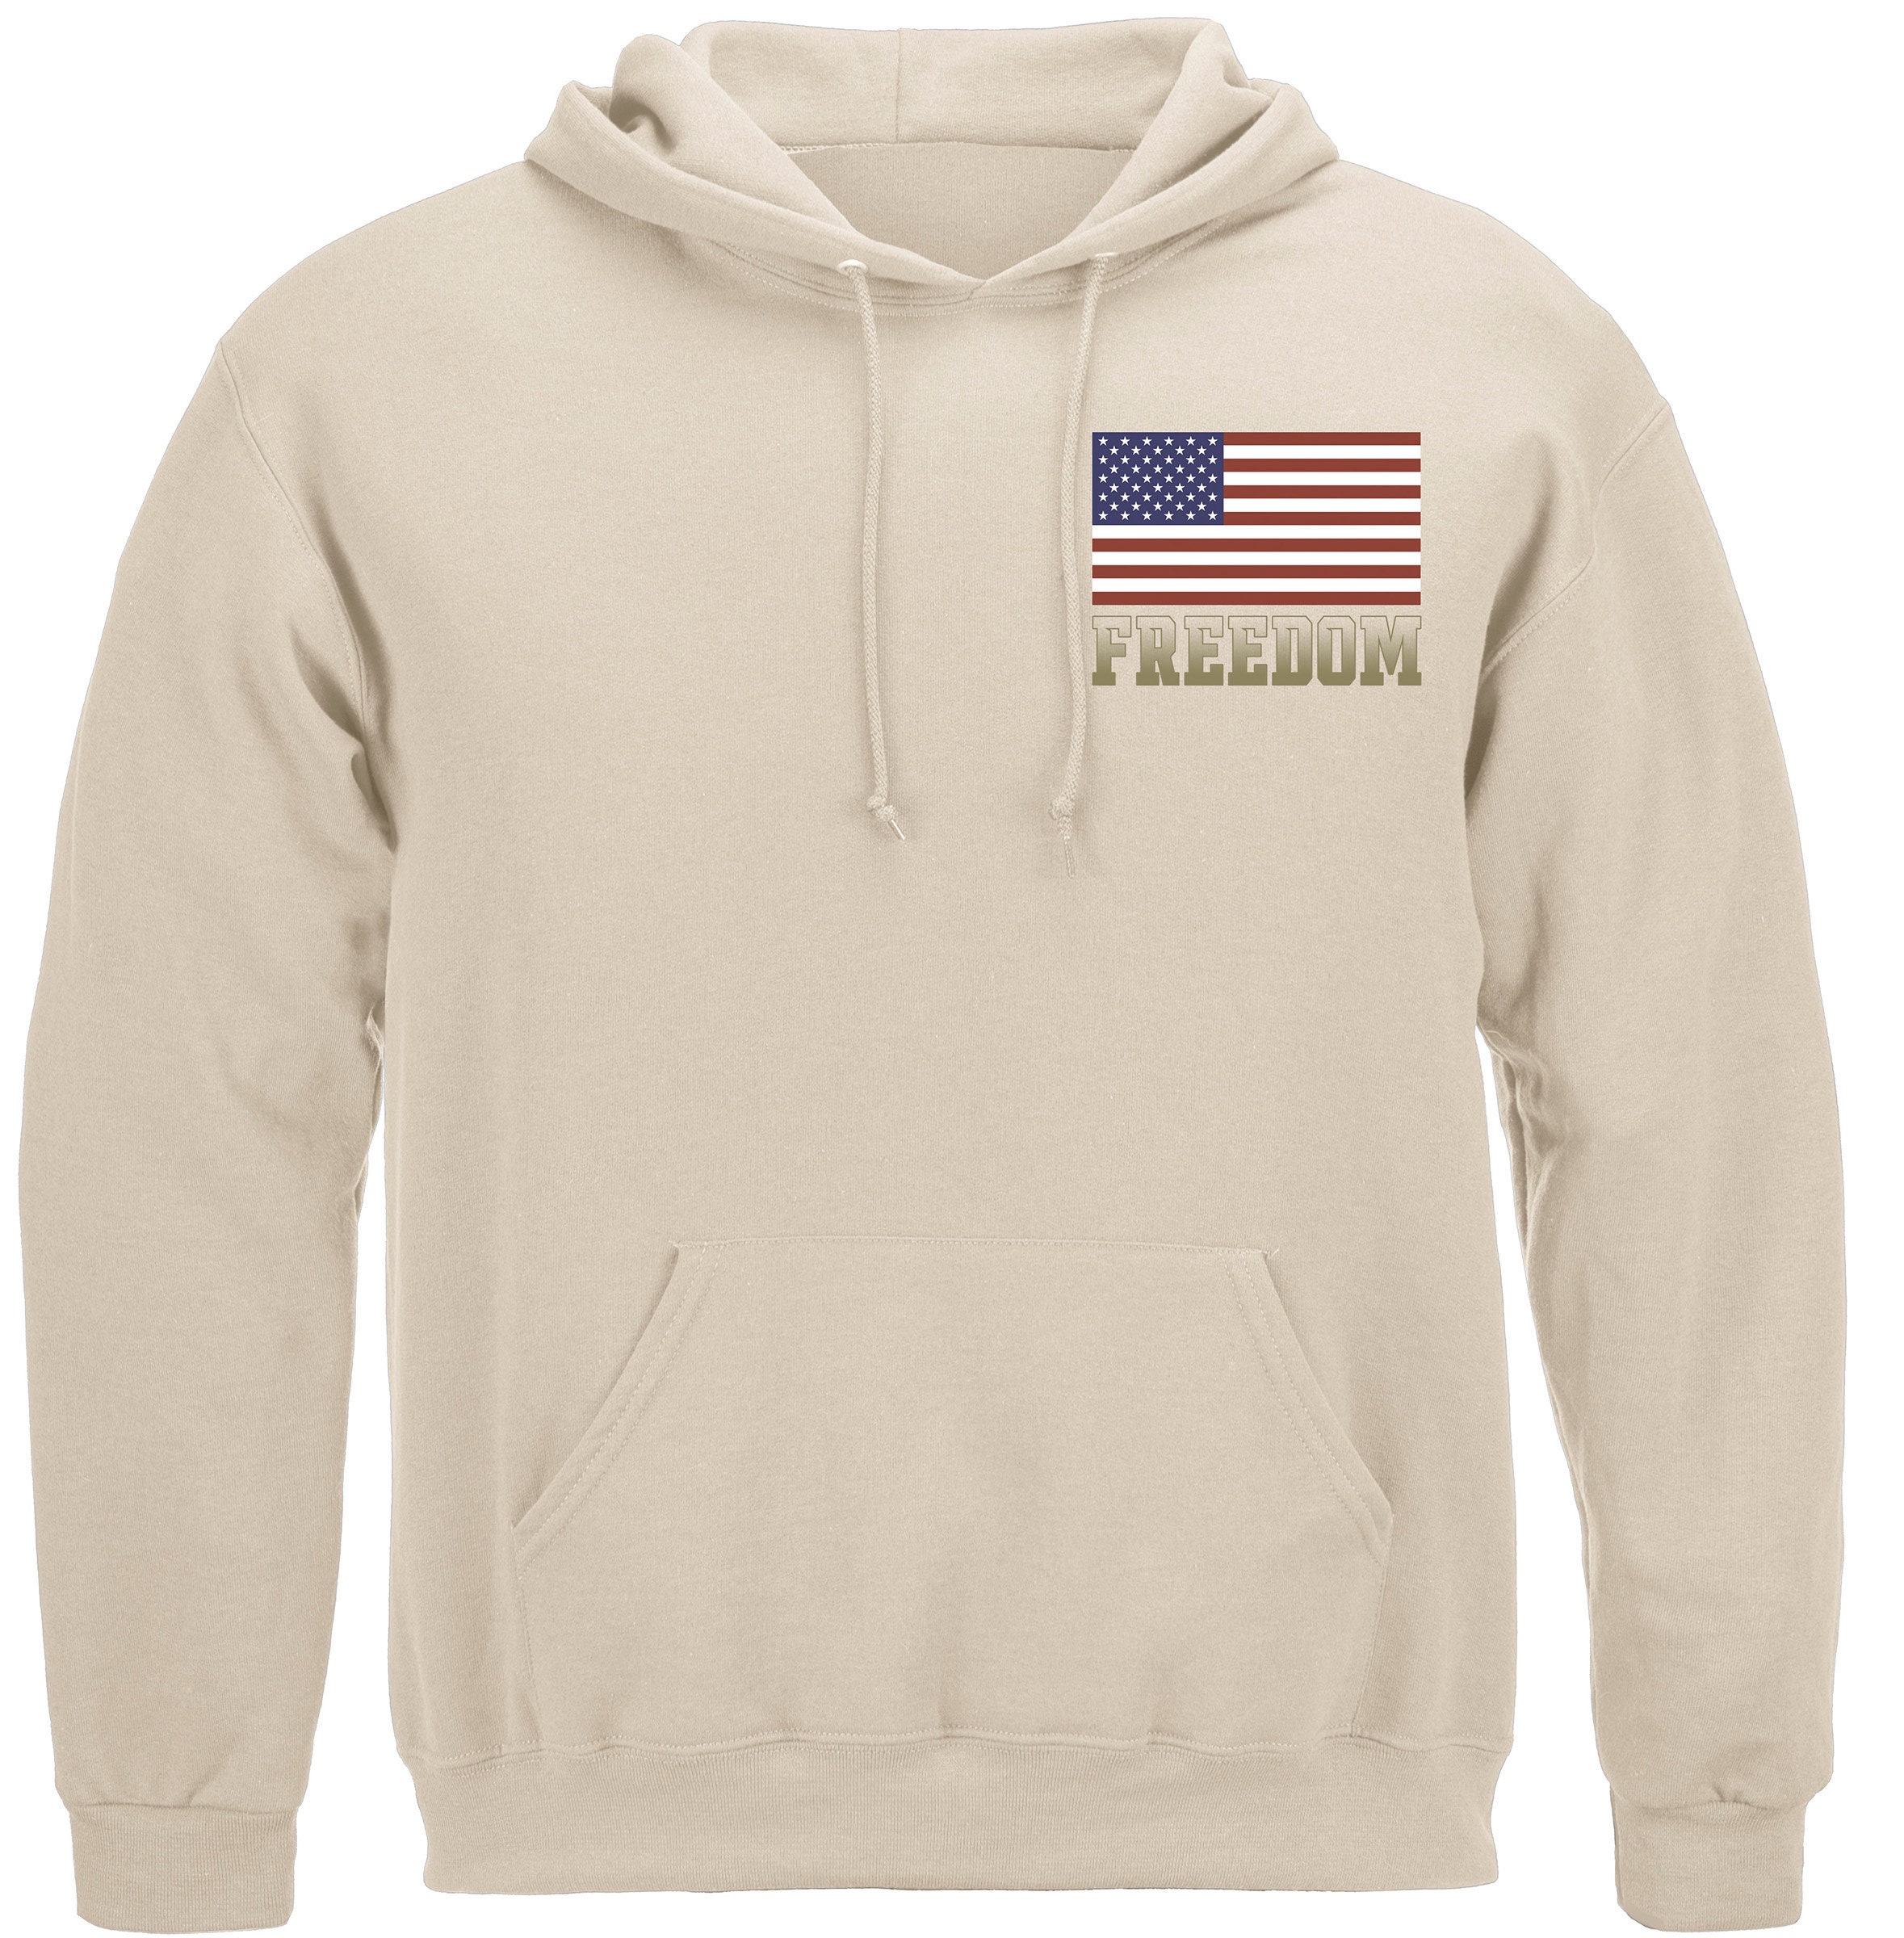 Freedom Full Battle Rattle T-shirt Sweatshirt Hoodie MM2390 - Etsy